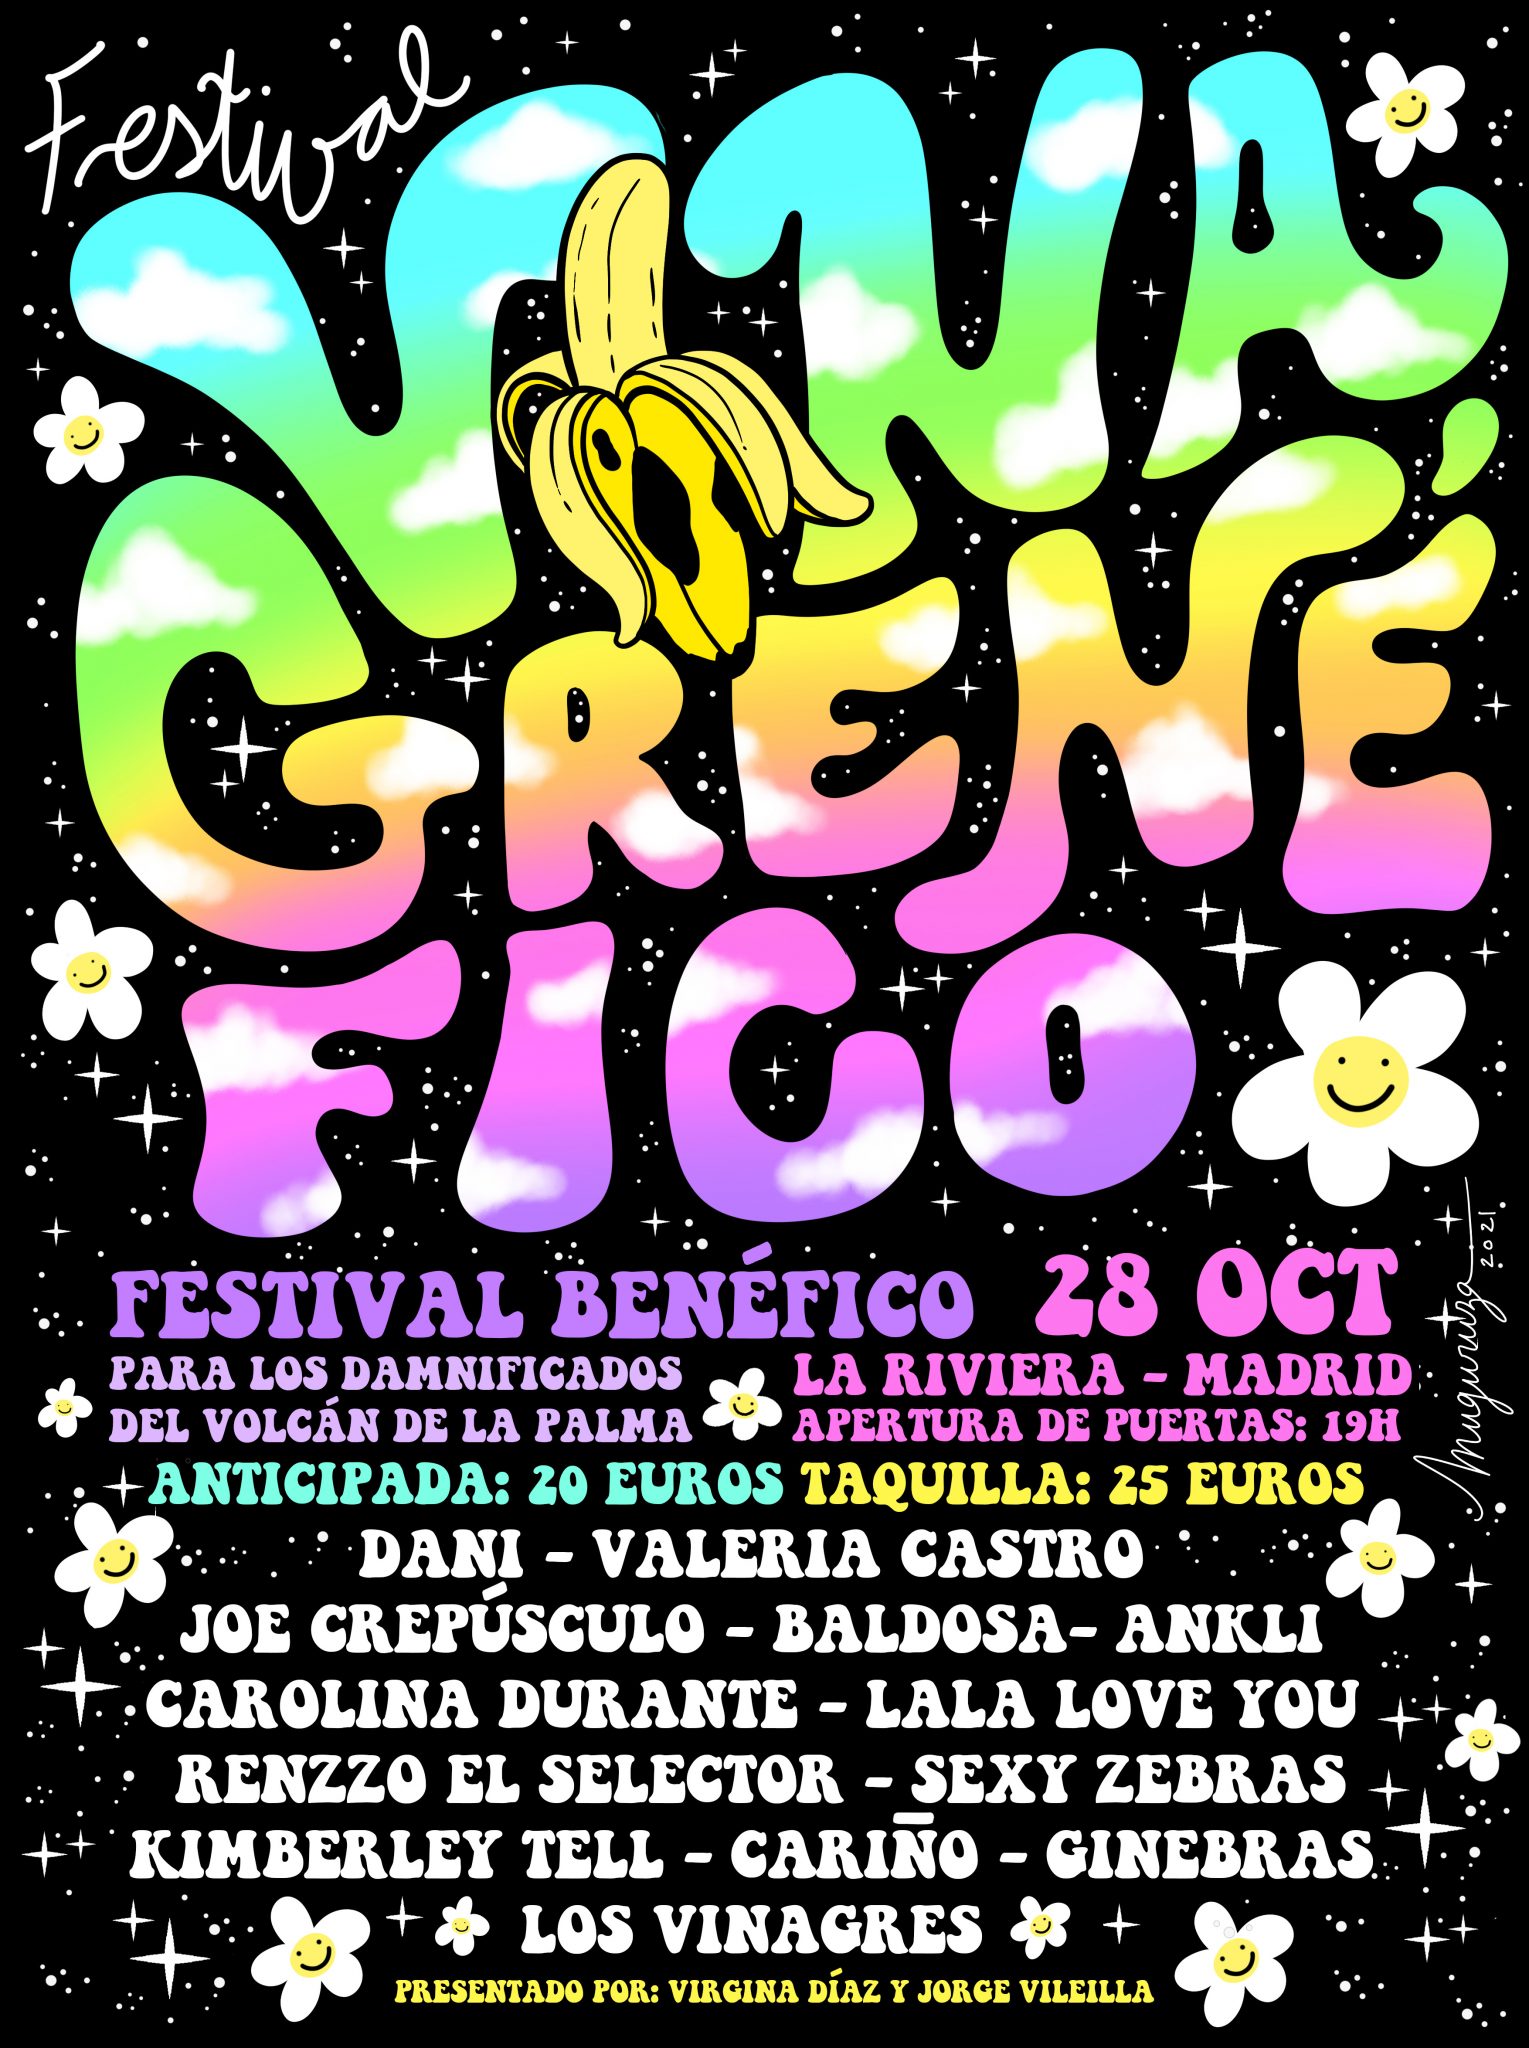 Festival benéfico VINAGRENÉFICO por LA PALMA